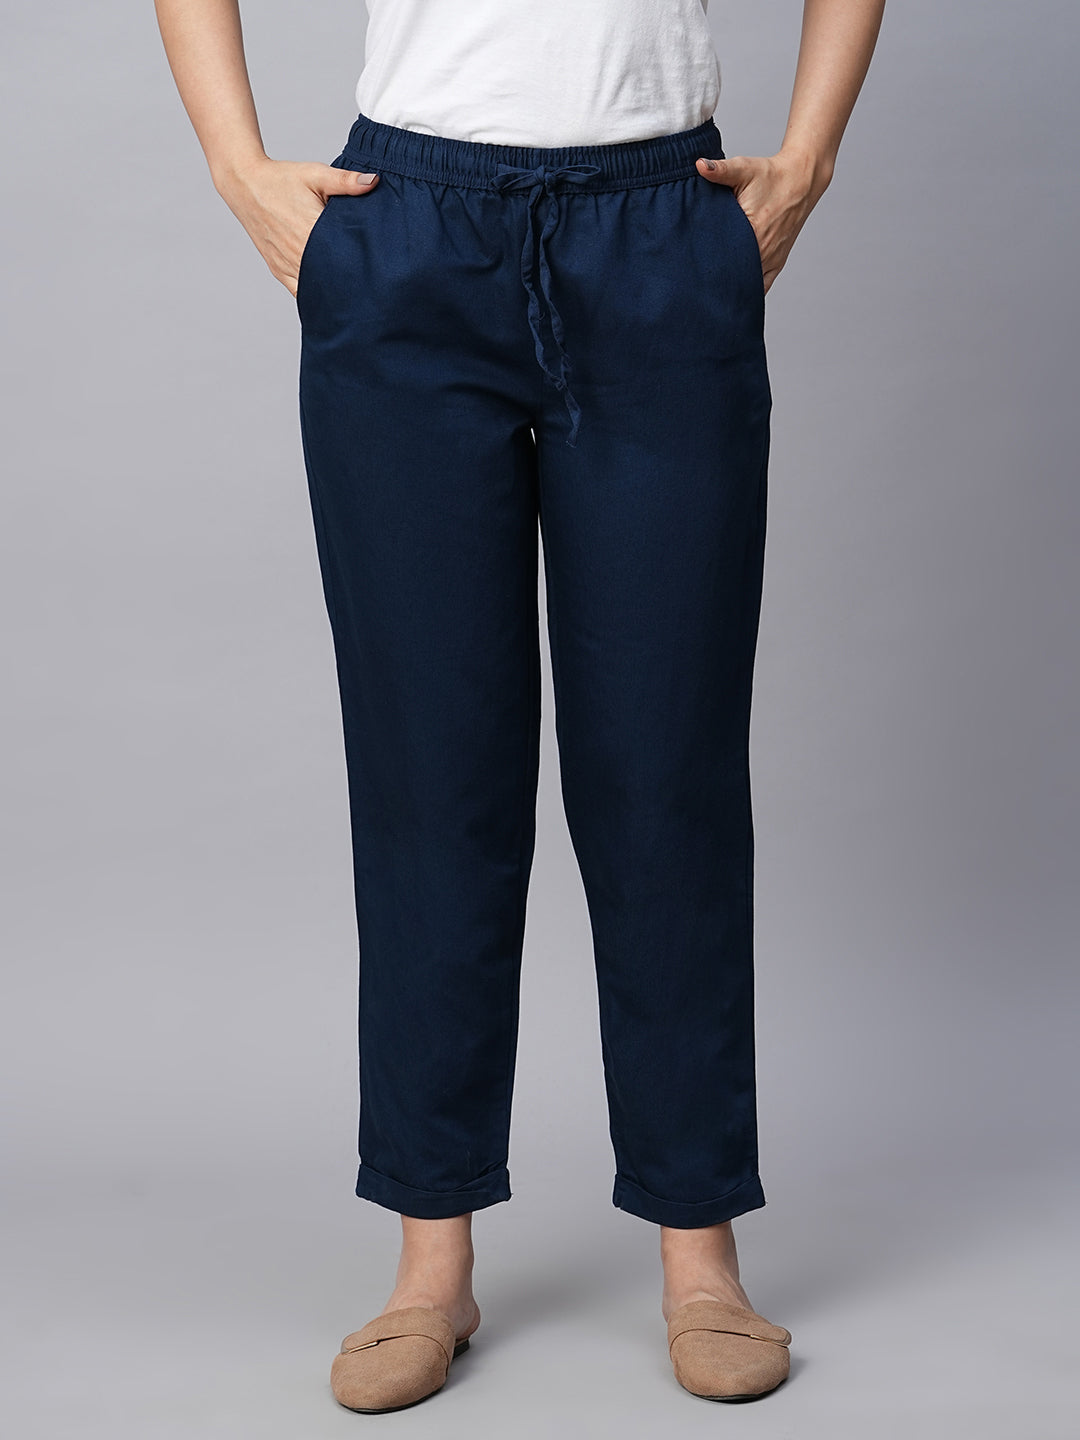 Women's Navy Linen Cotton Regular Fit Pant